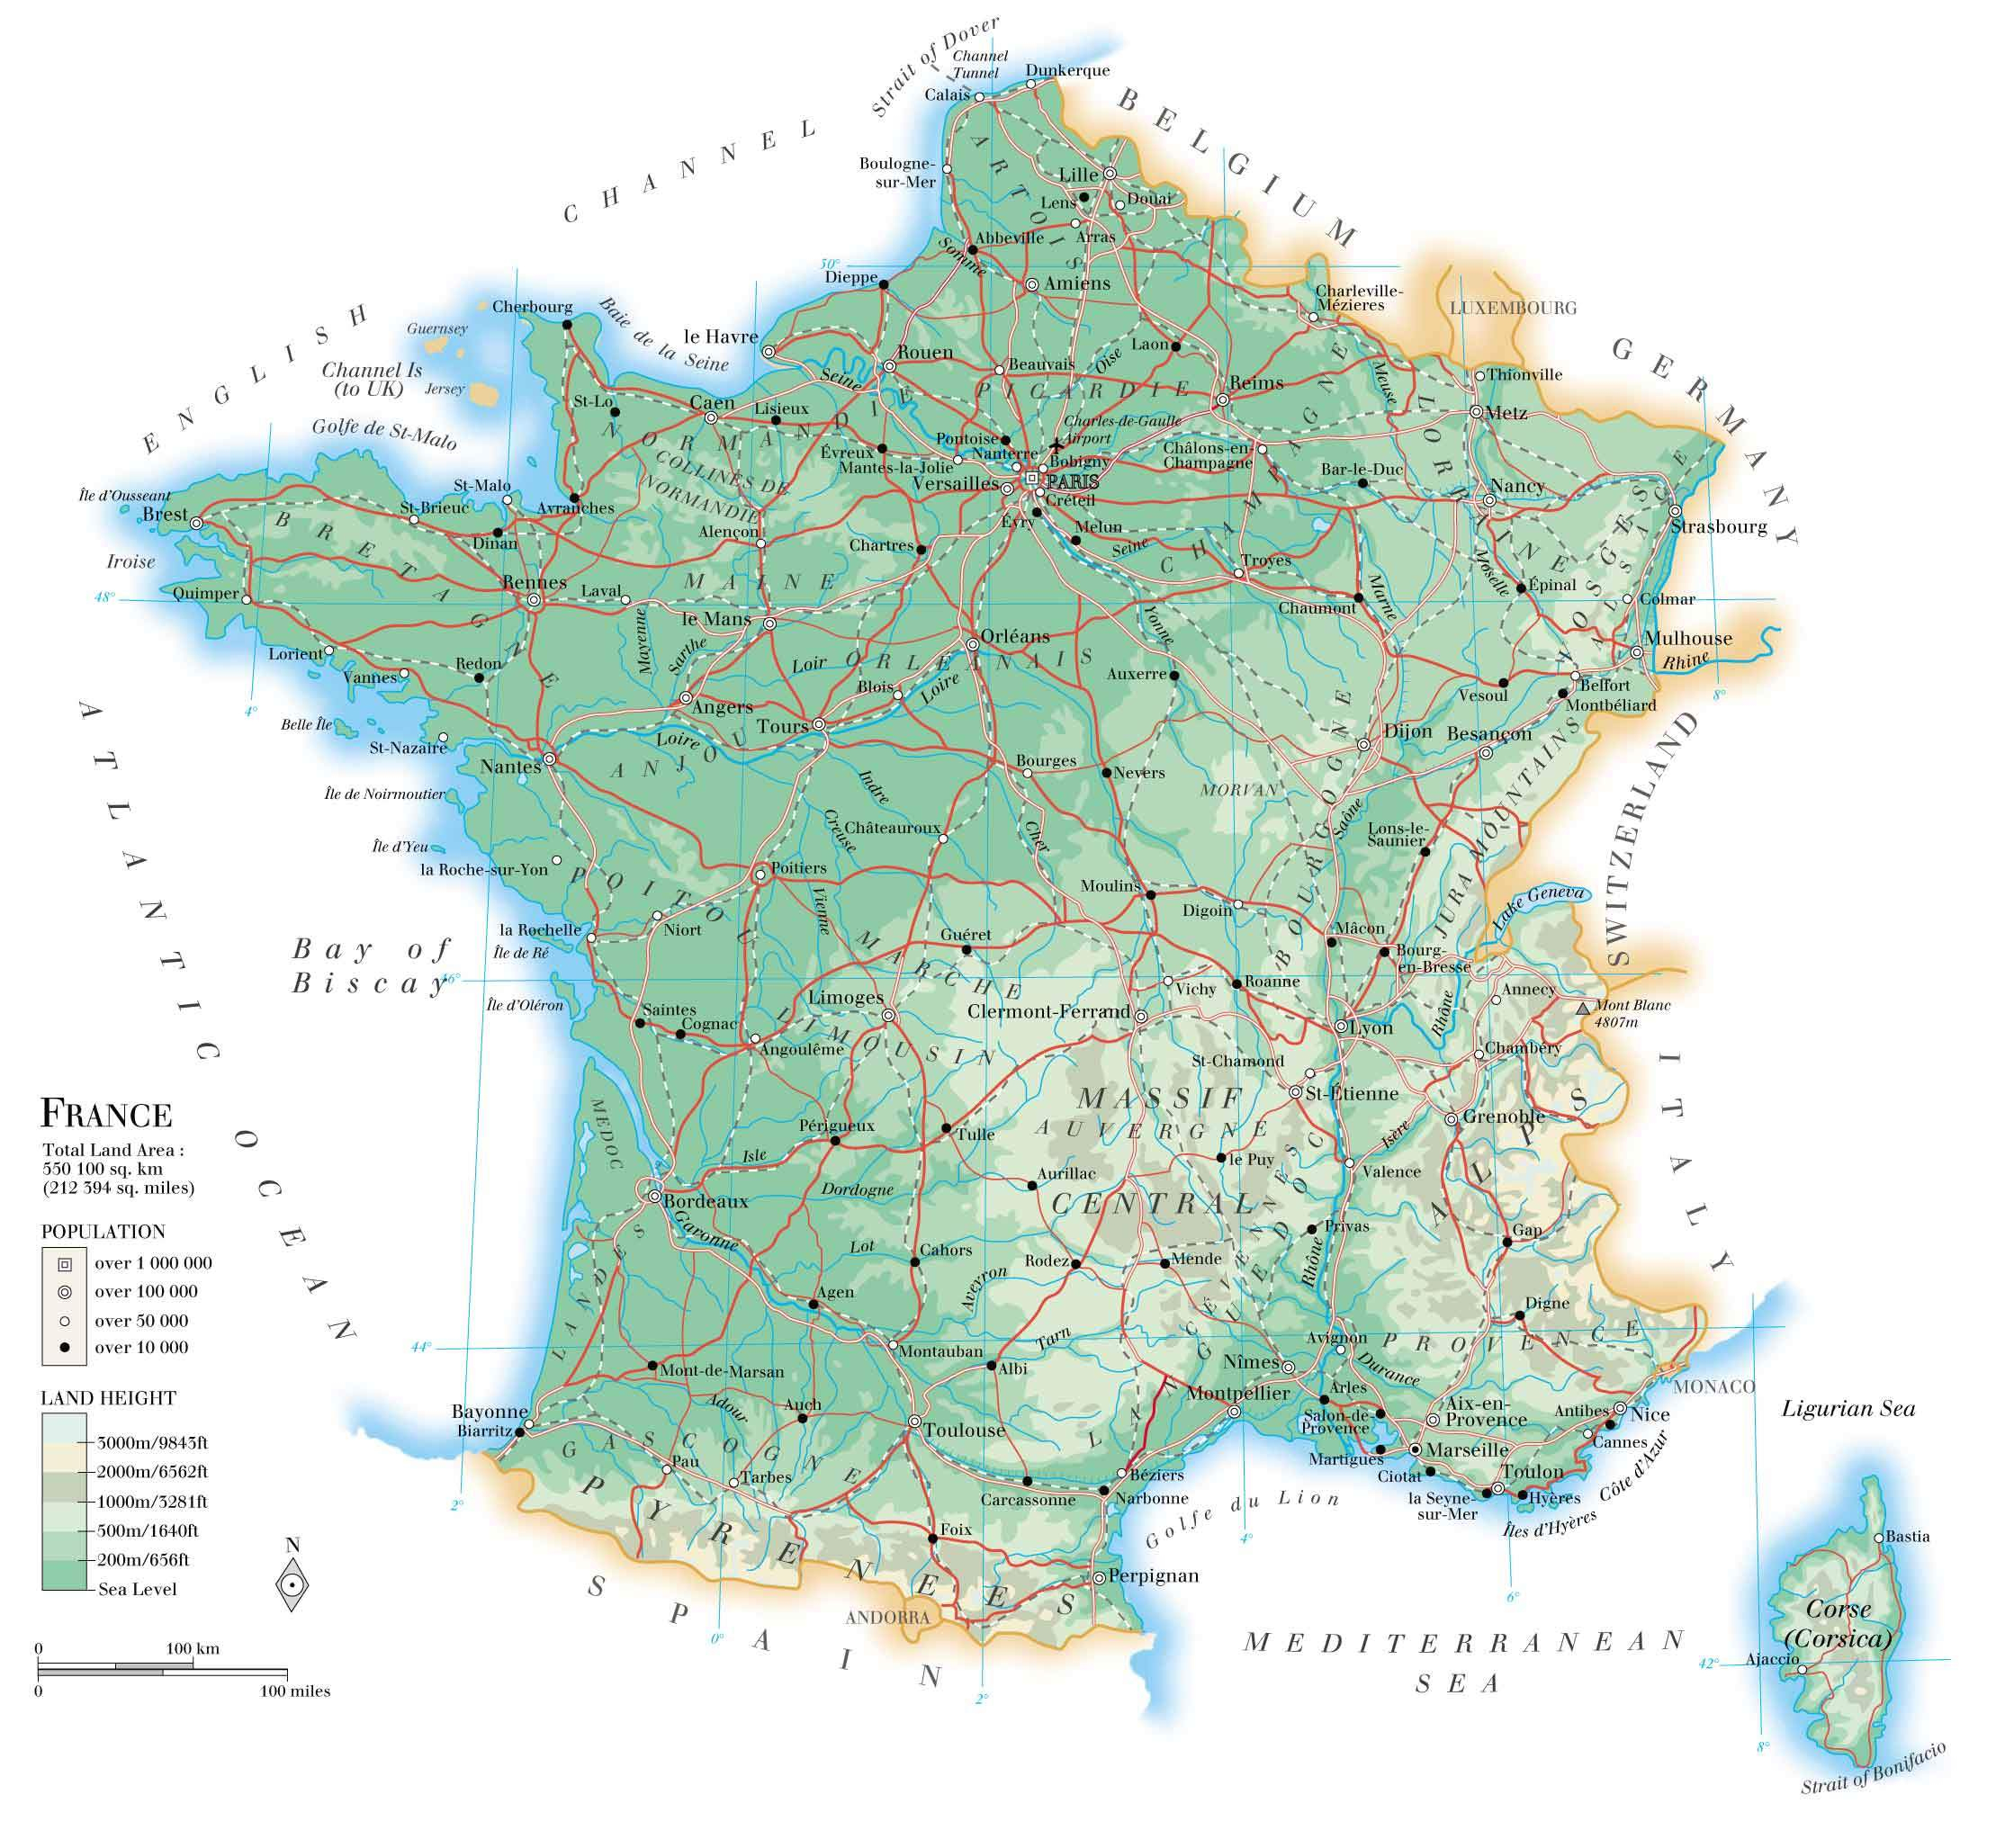 Grande Carte De France A Imprimer | My Blog pour Imprimer Une Carte De France